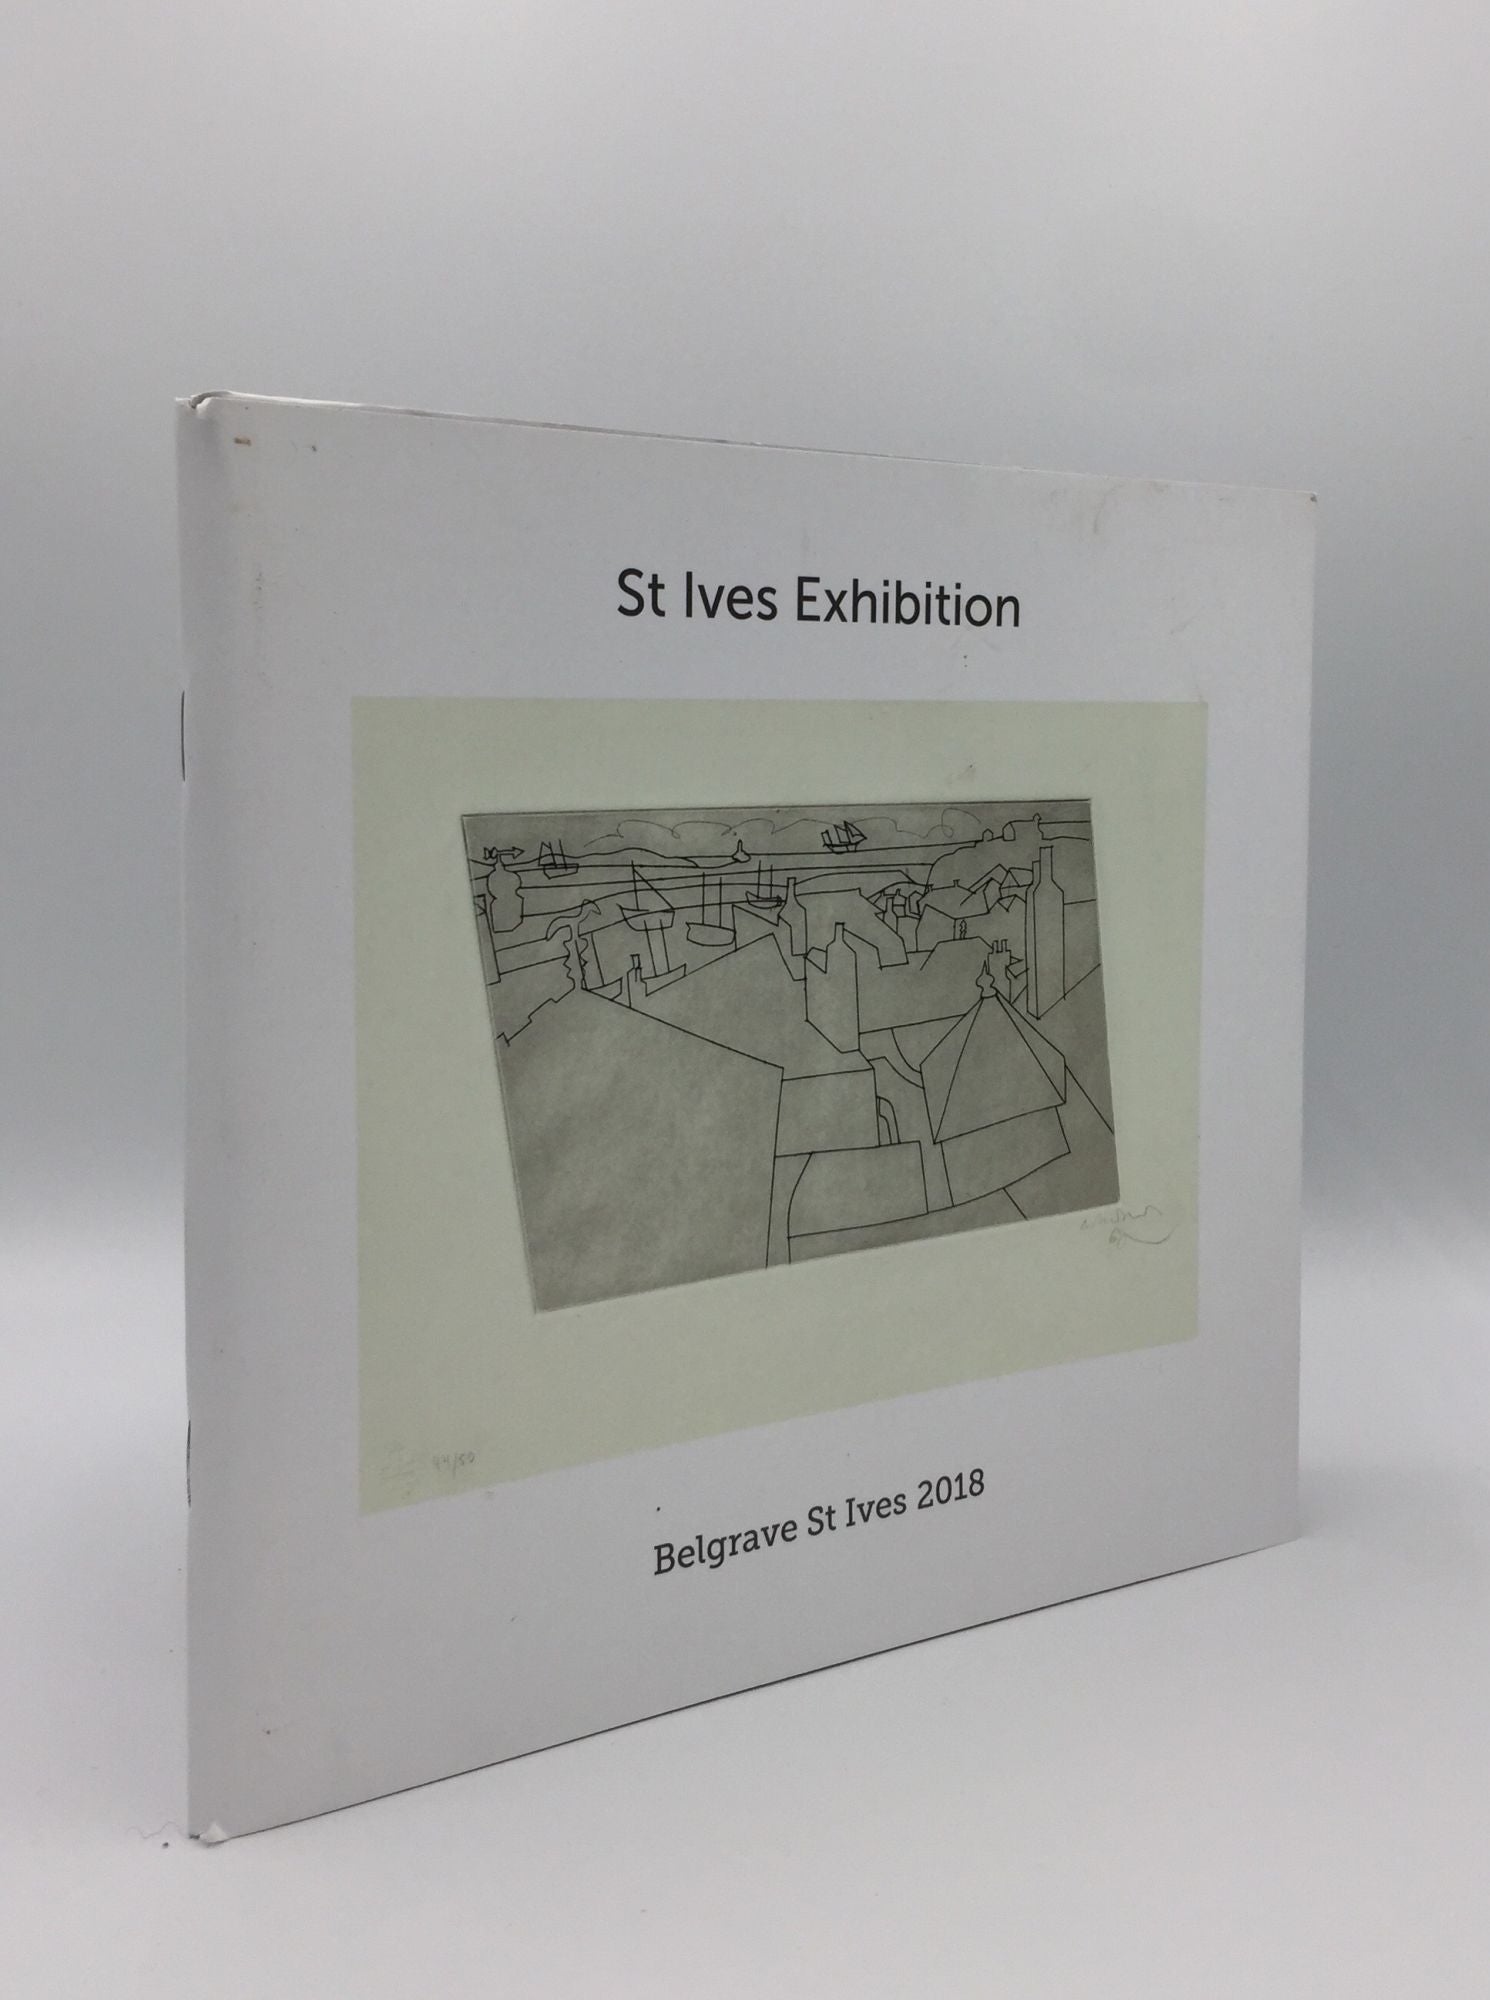 Belgrave St Ives - St Ives Exhibition 2018